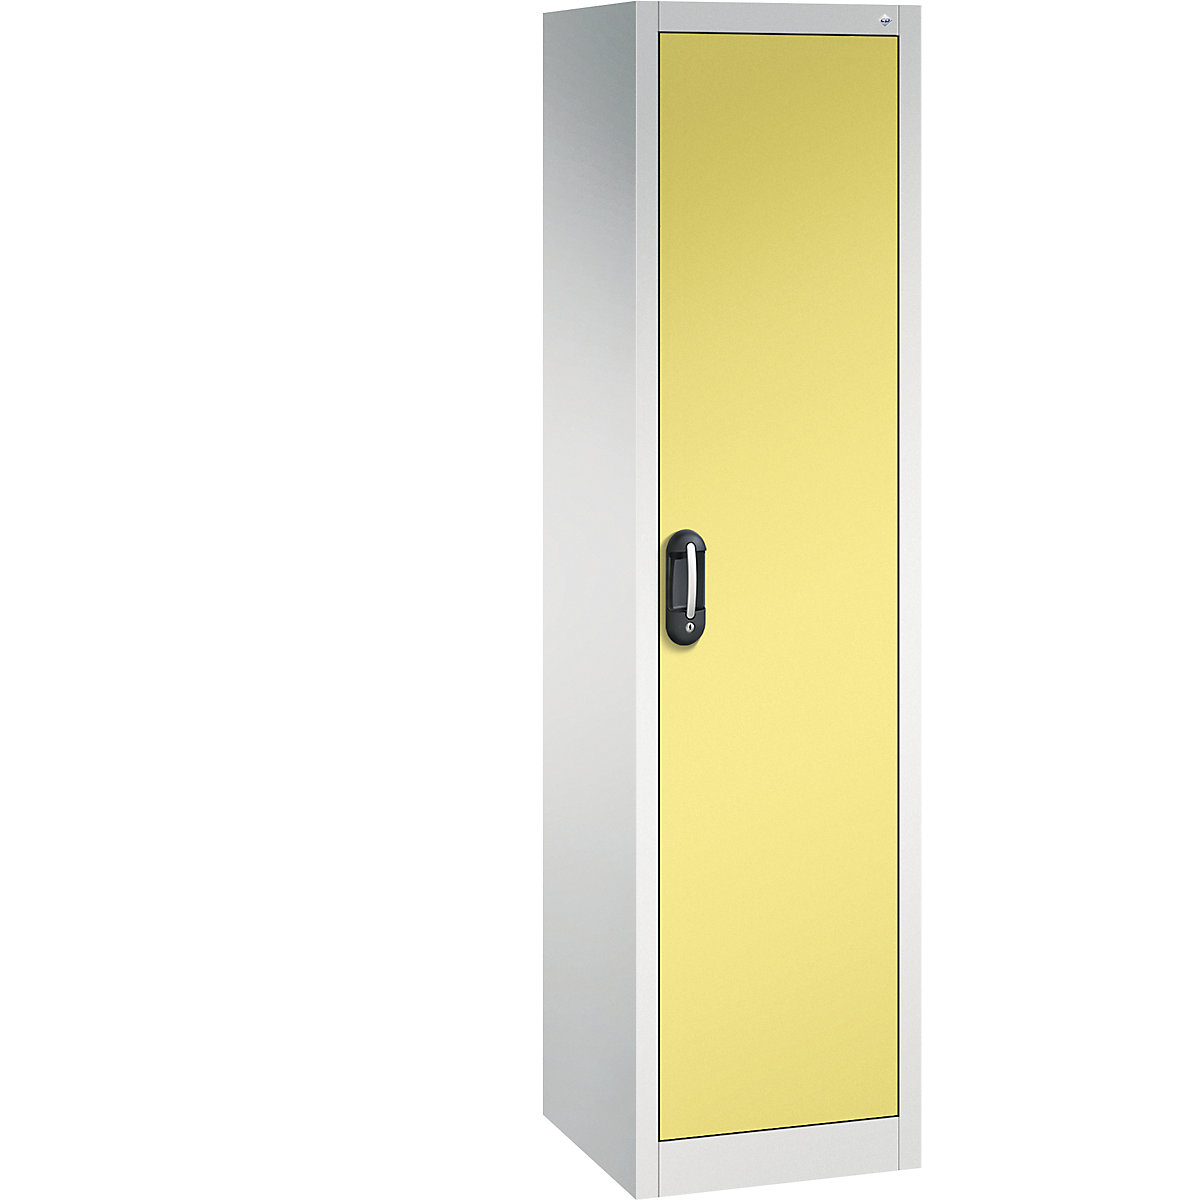 C+P – ACURADO universal cupboard, WxD 500 x 500 mm, light grey / sulphur yellow